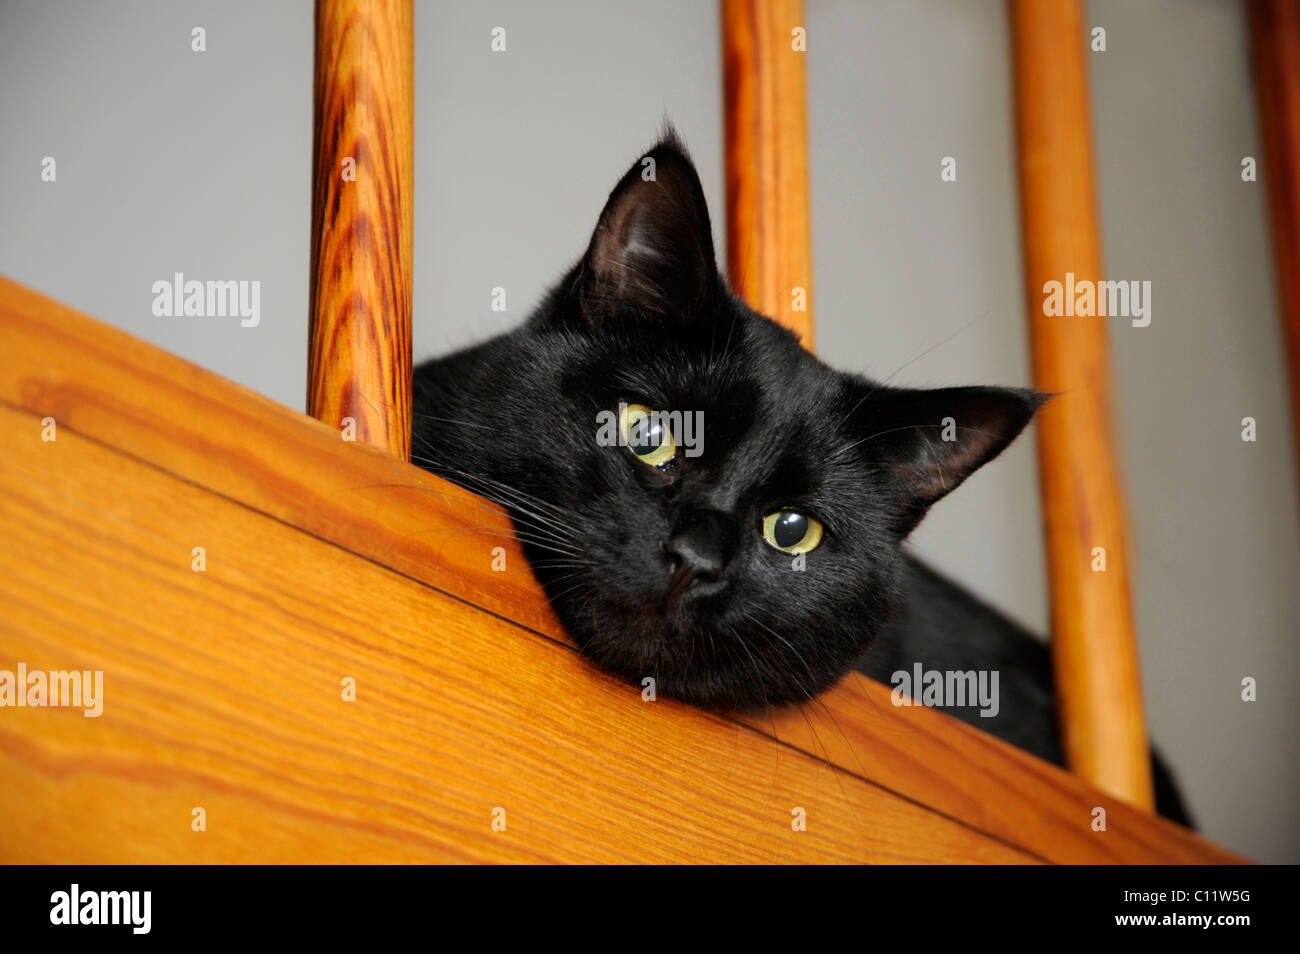 Black cat peering through railings Stock Photo